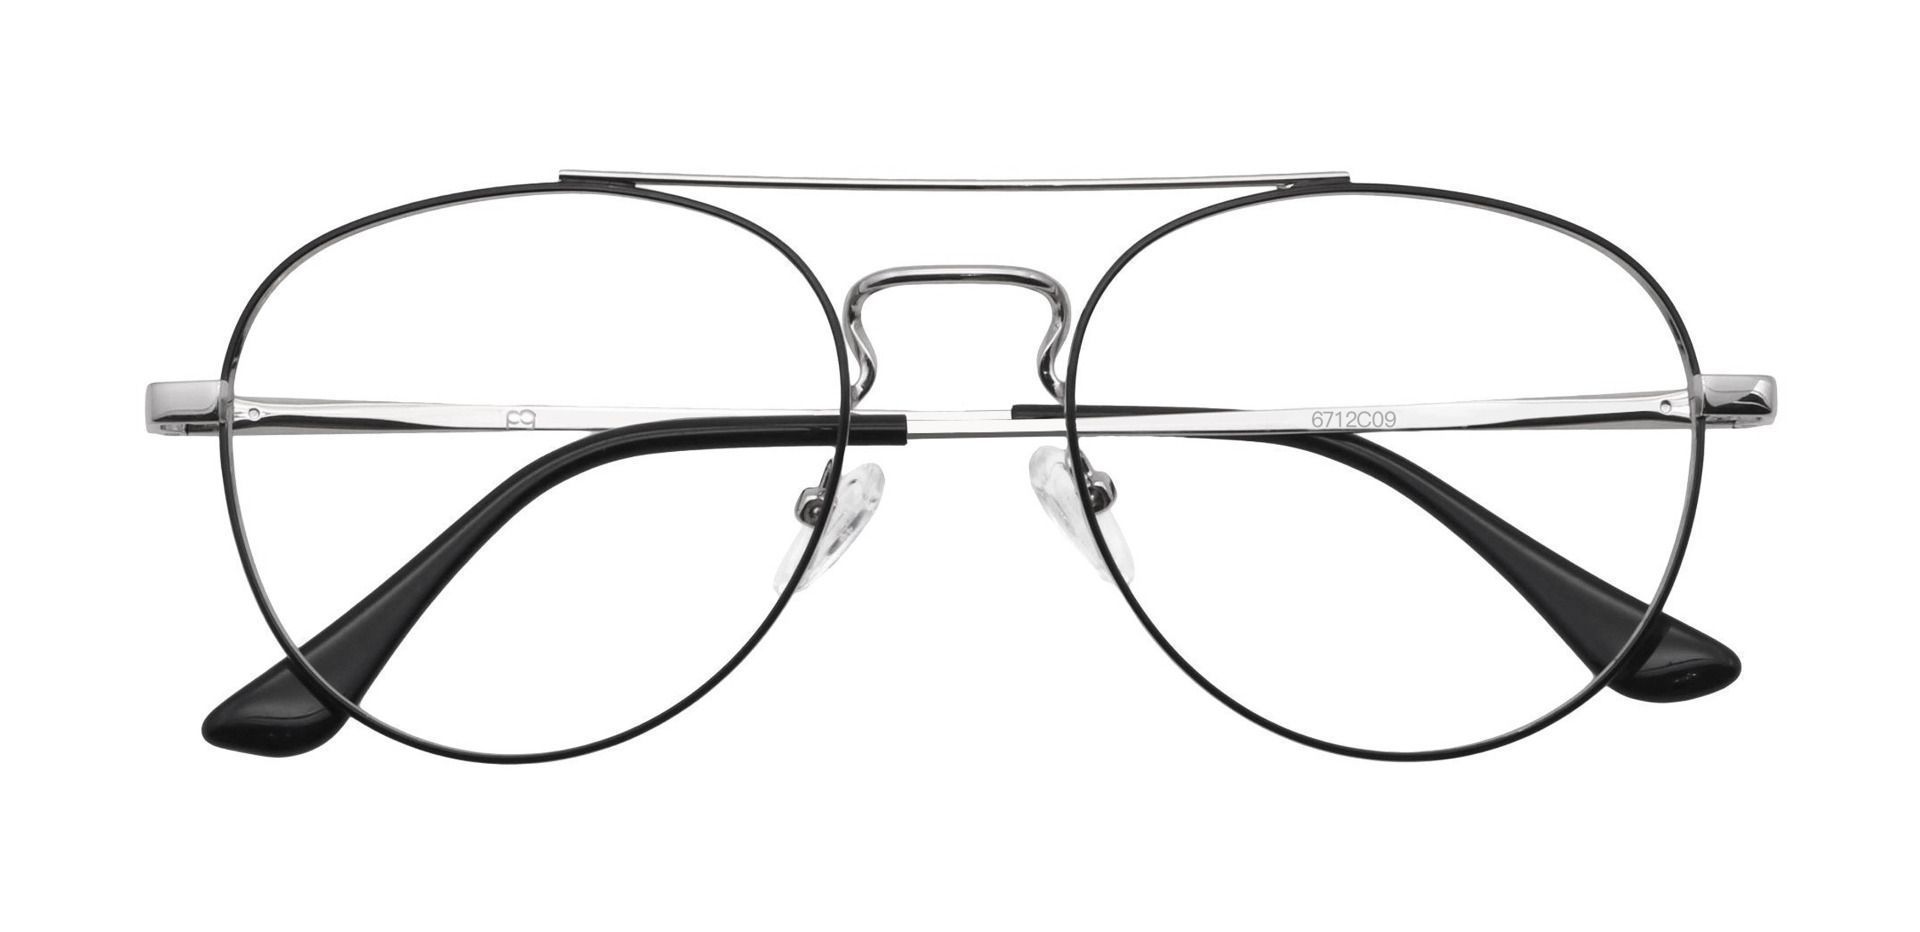 Trapp Aviator Lined Bifocal Glasses - Gray